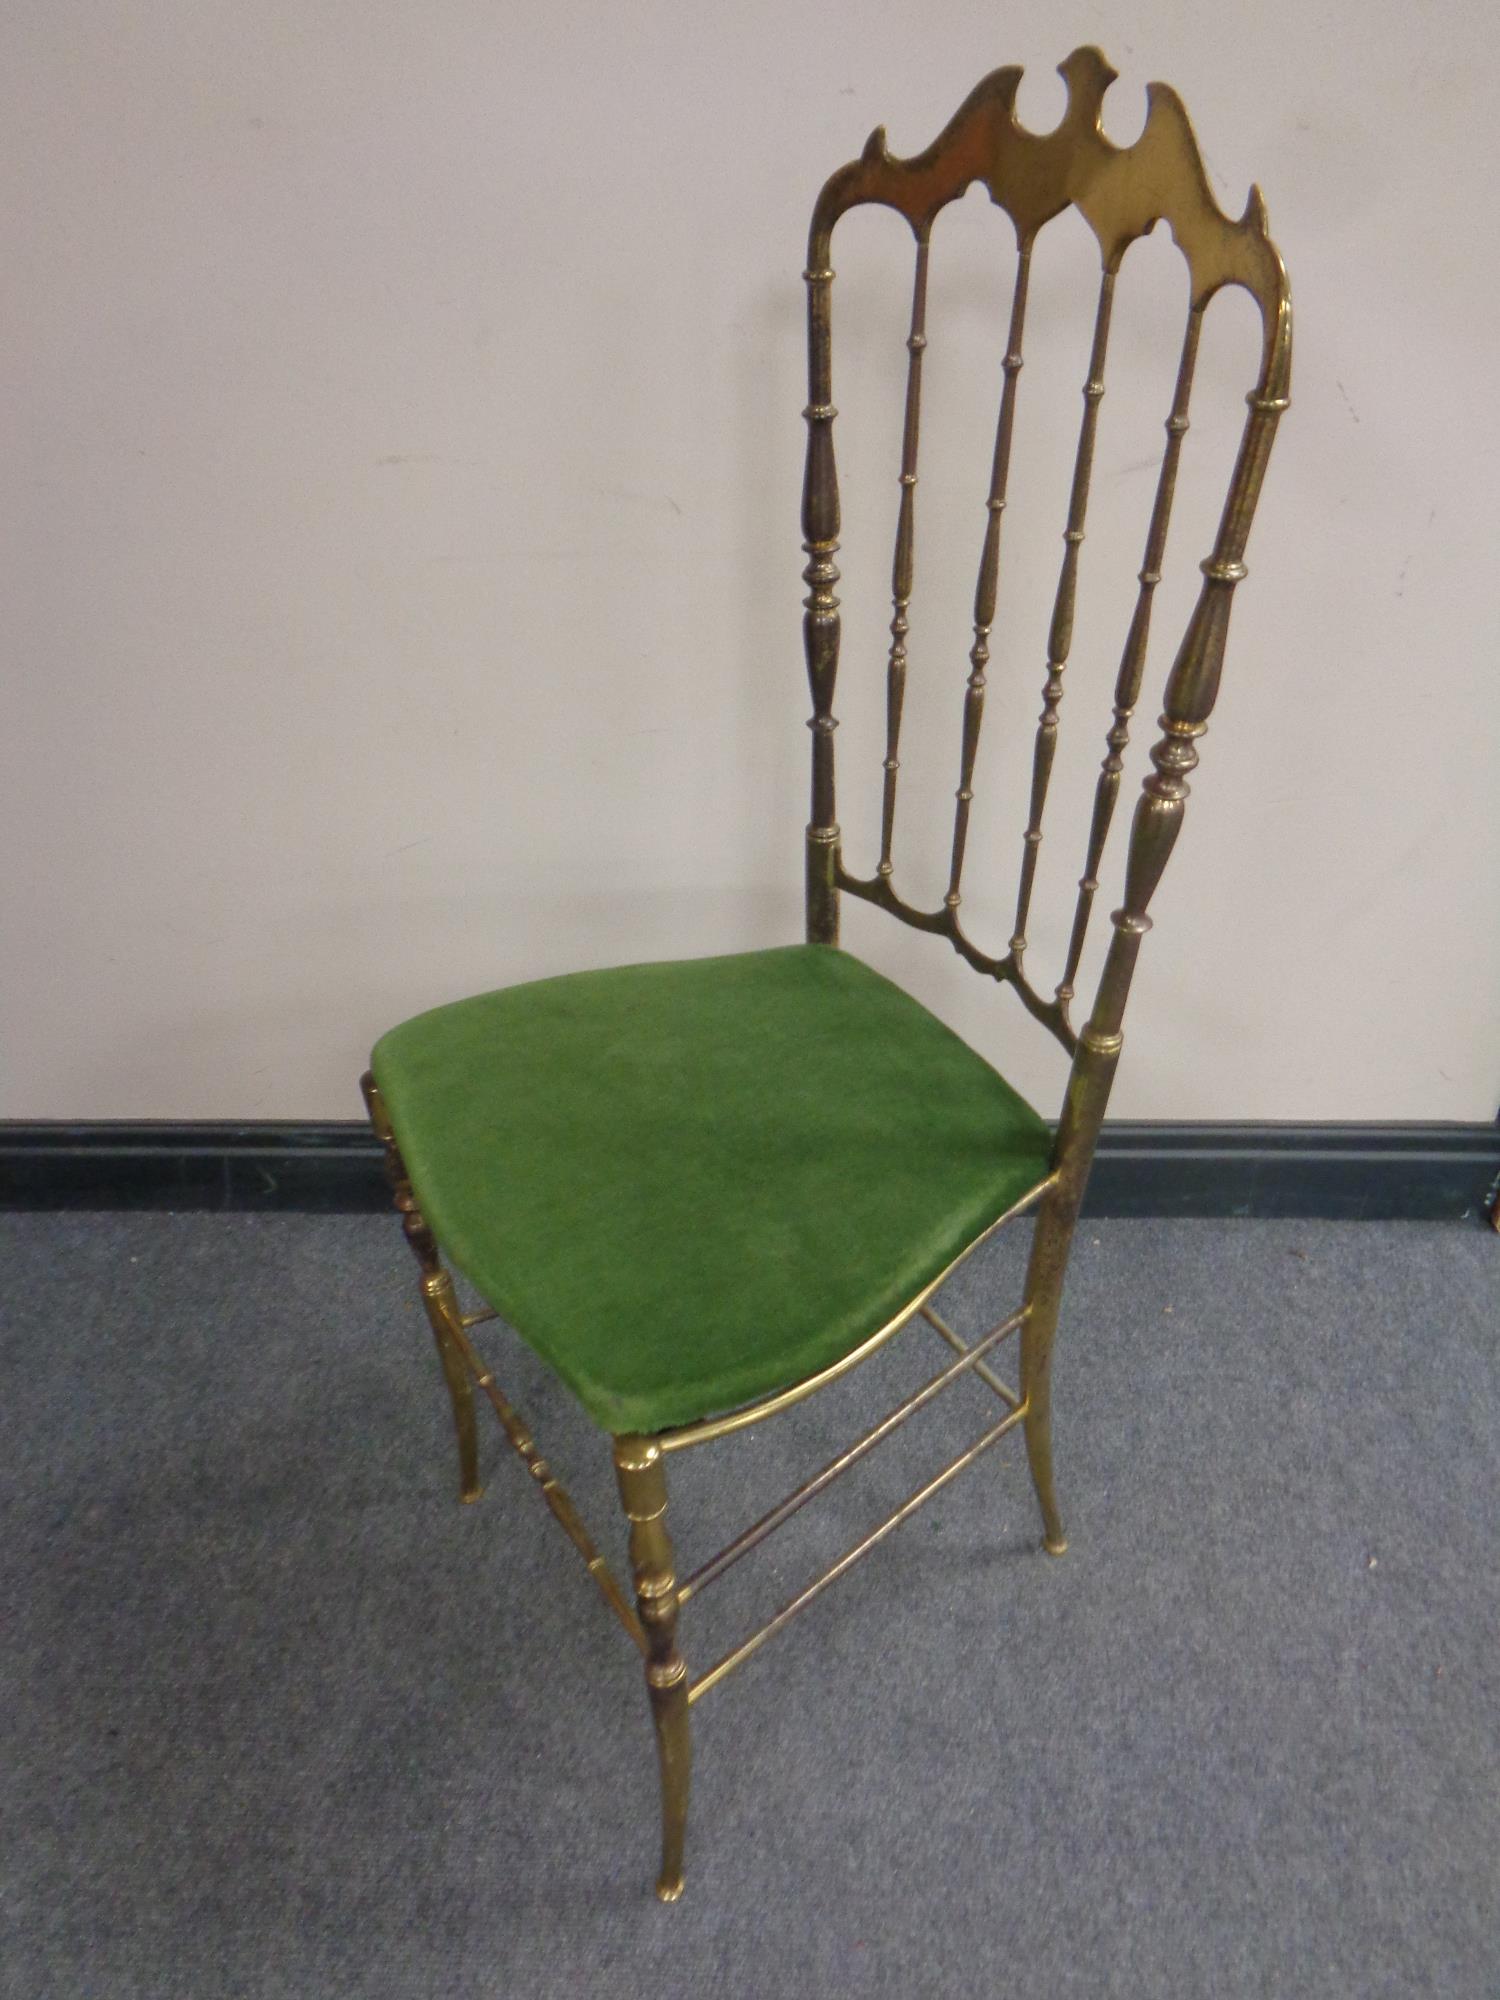 A brass bedroom chair